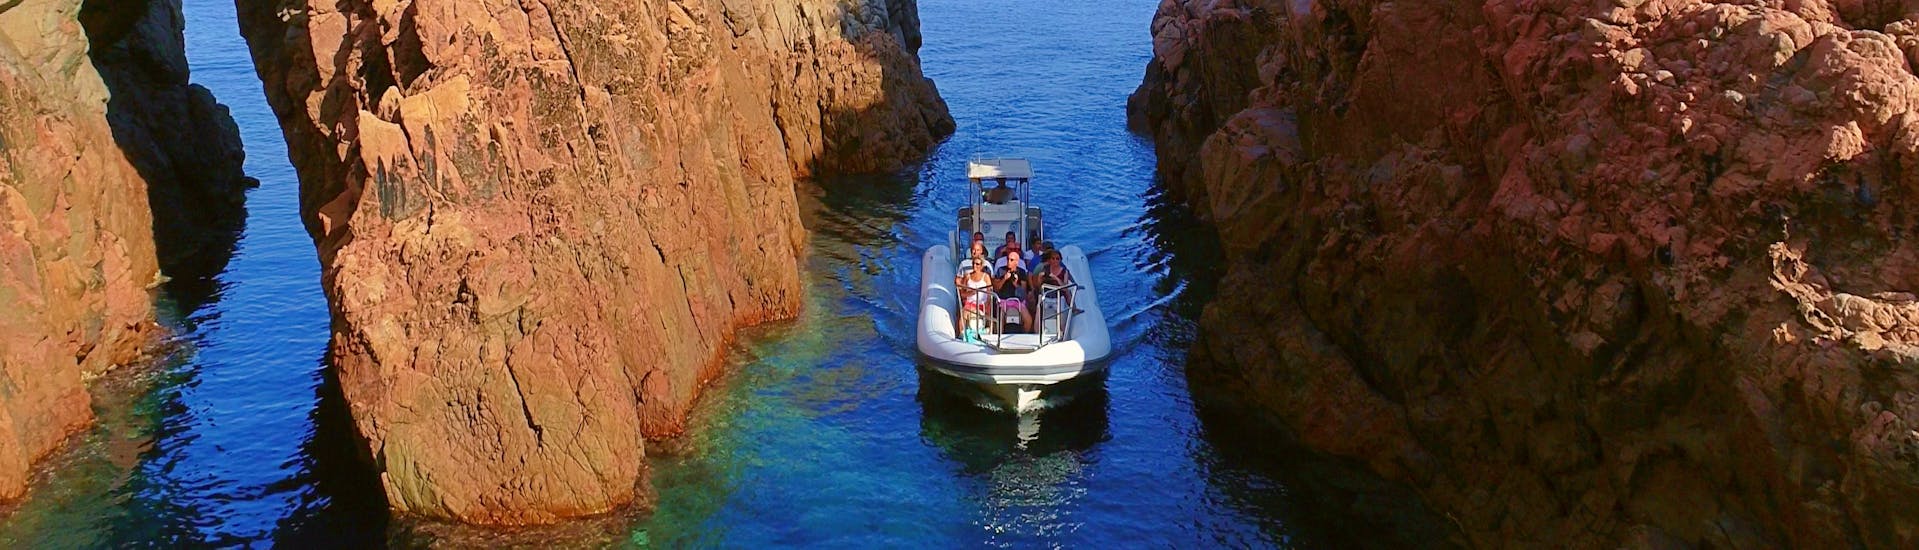 Eine Familie macht eine Semi-Privatbootfahrt zu den Calanques de Piana ab Cargèse mit Croisière Grand Bleu Cargèse.